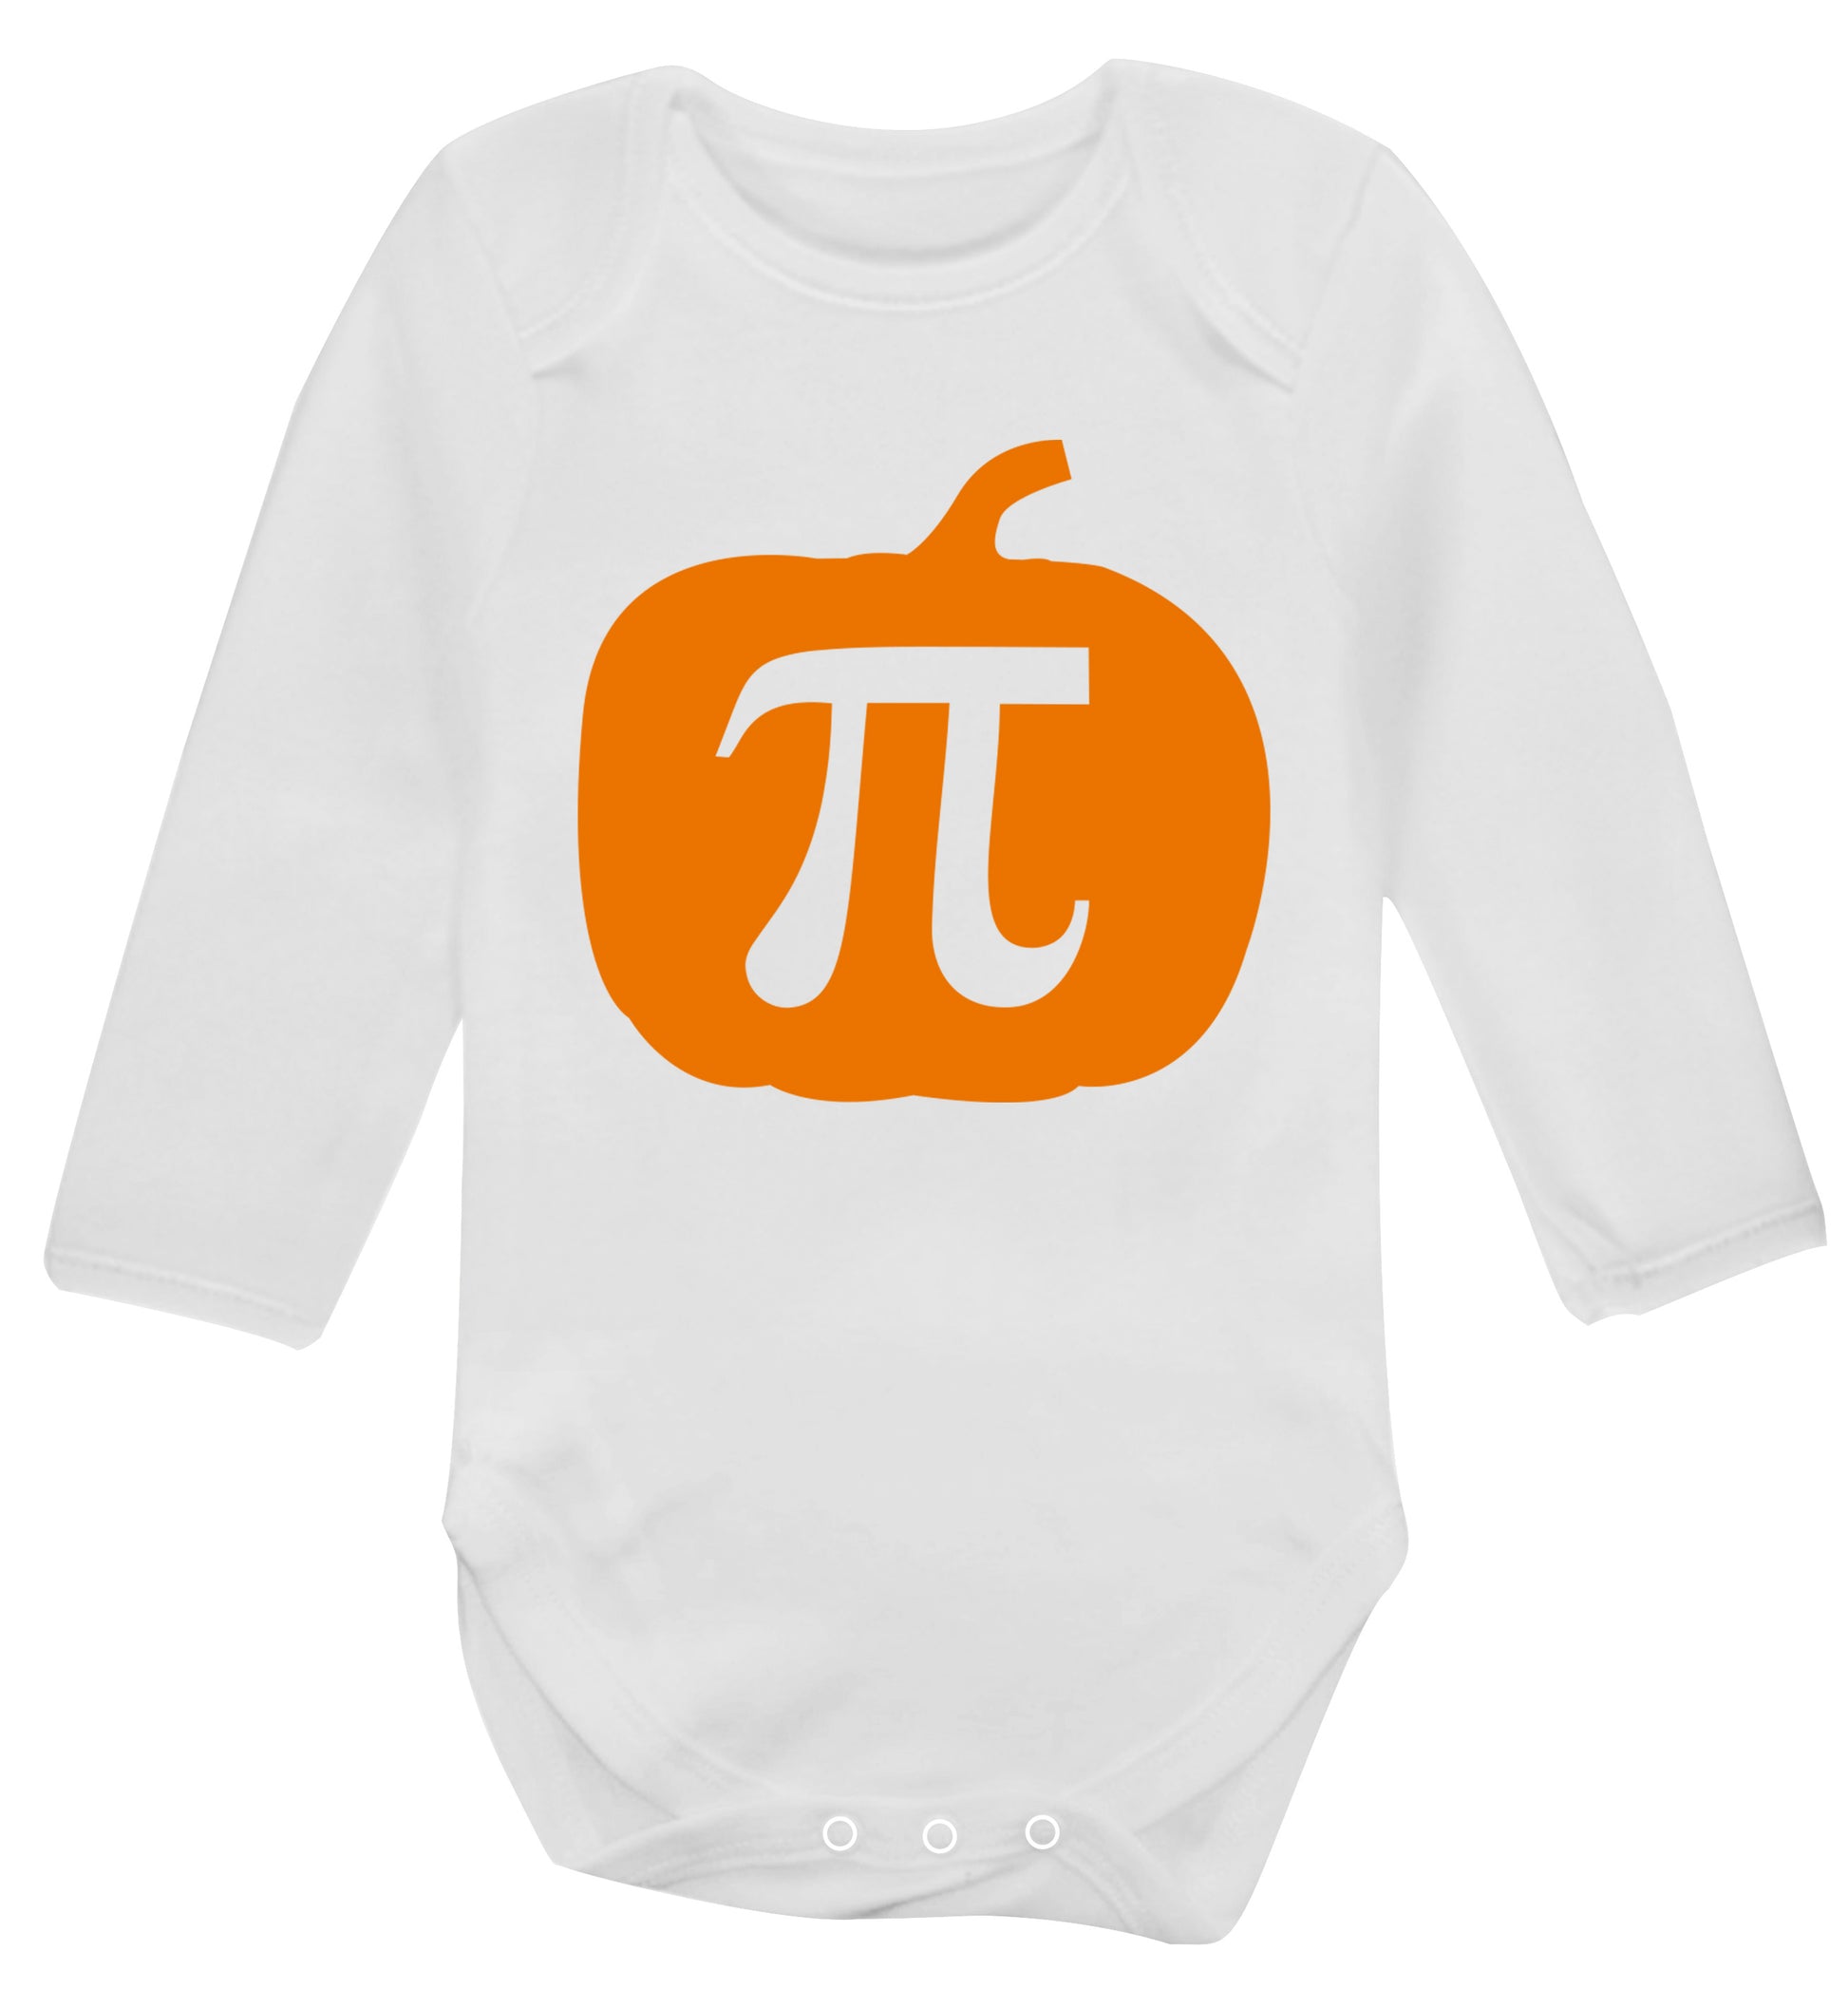 Pumpkin Pi Baby Vest long sleeved white 6-12 months